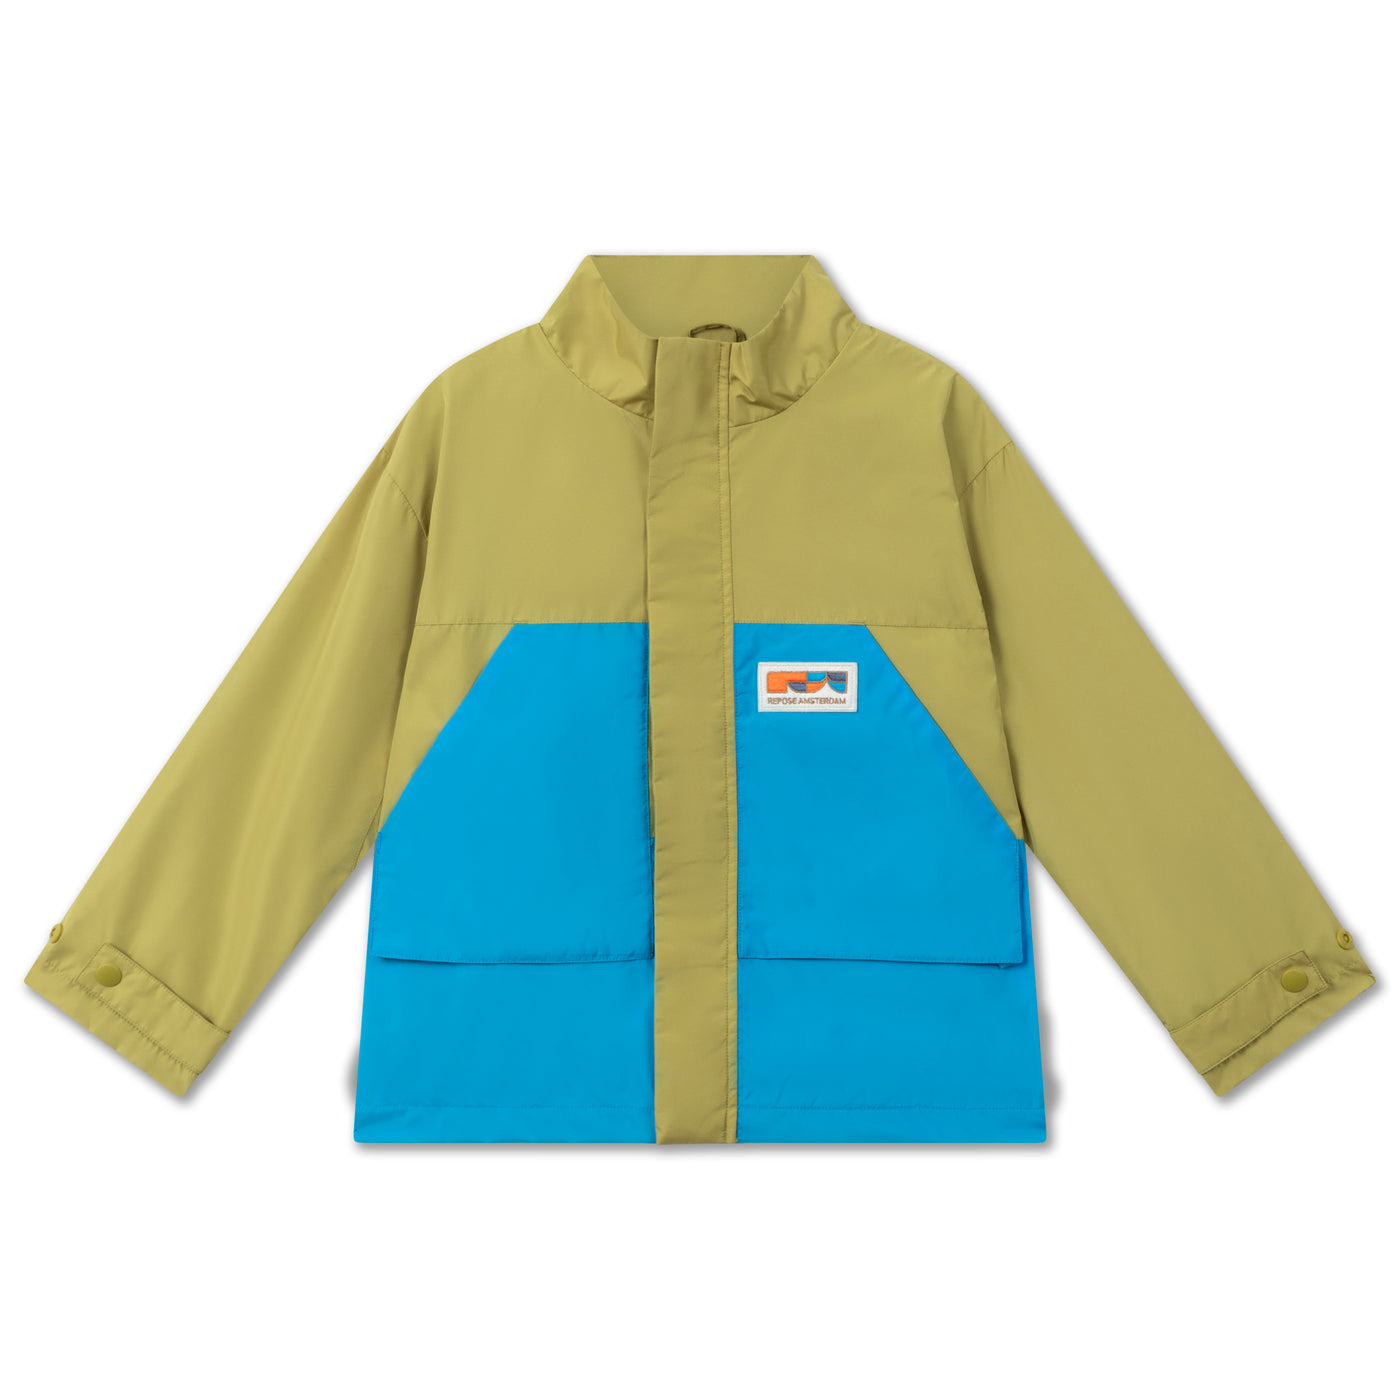 summer jacket - golden green bright blue color block